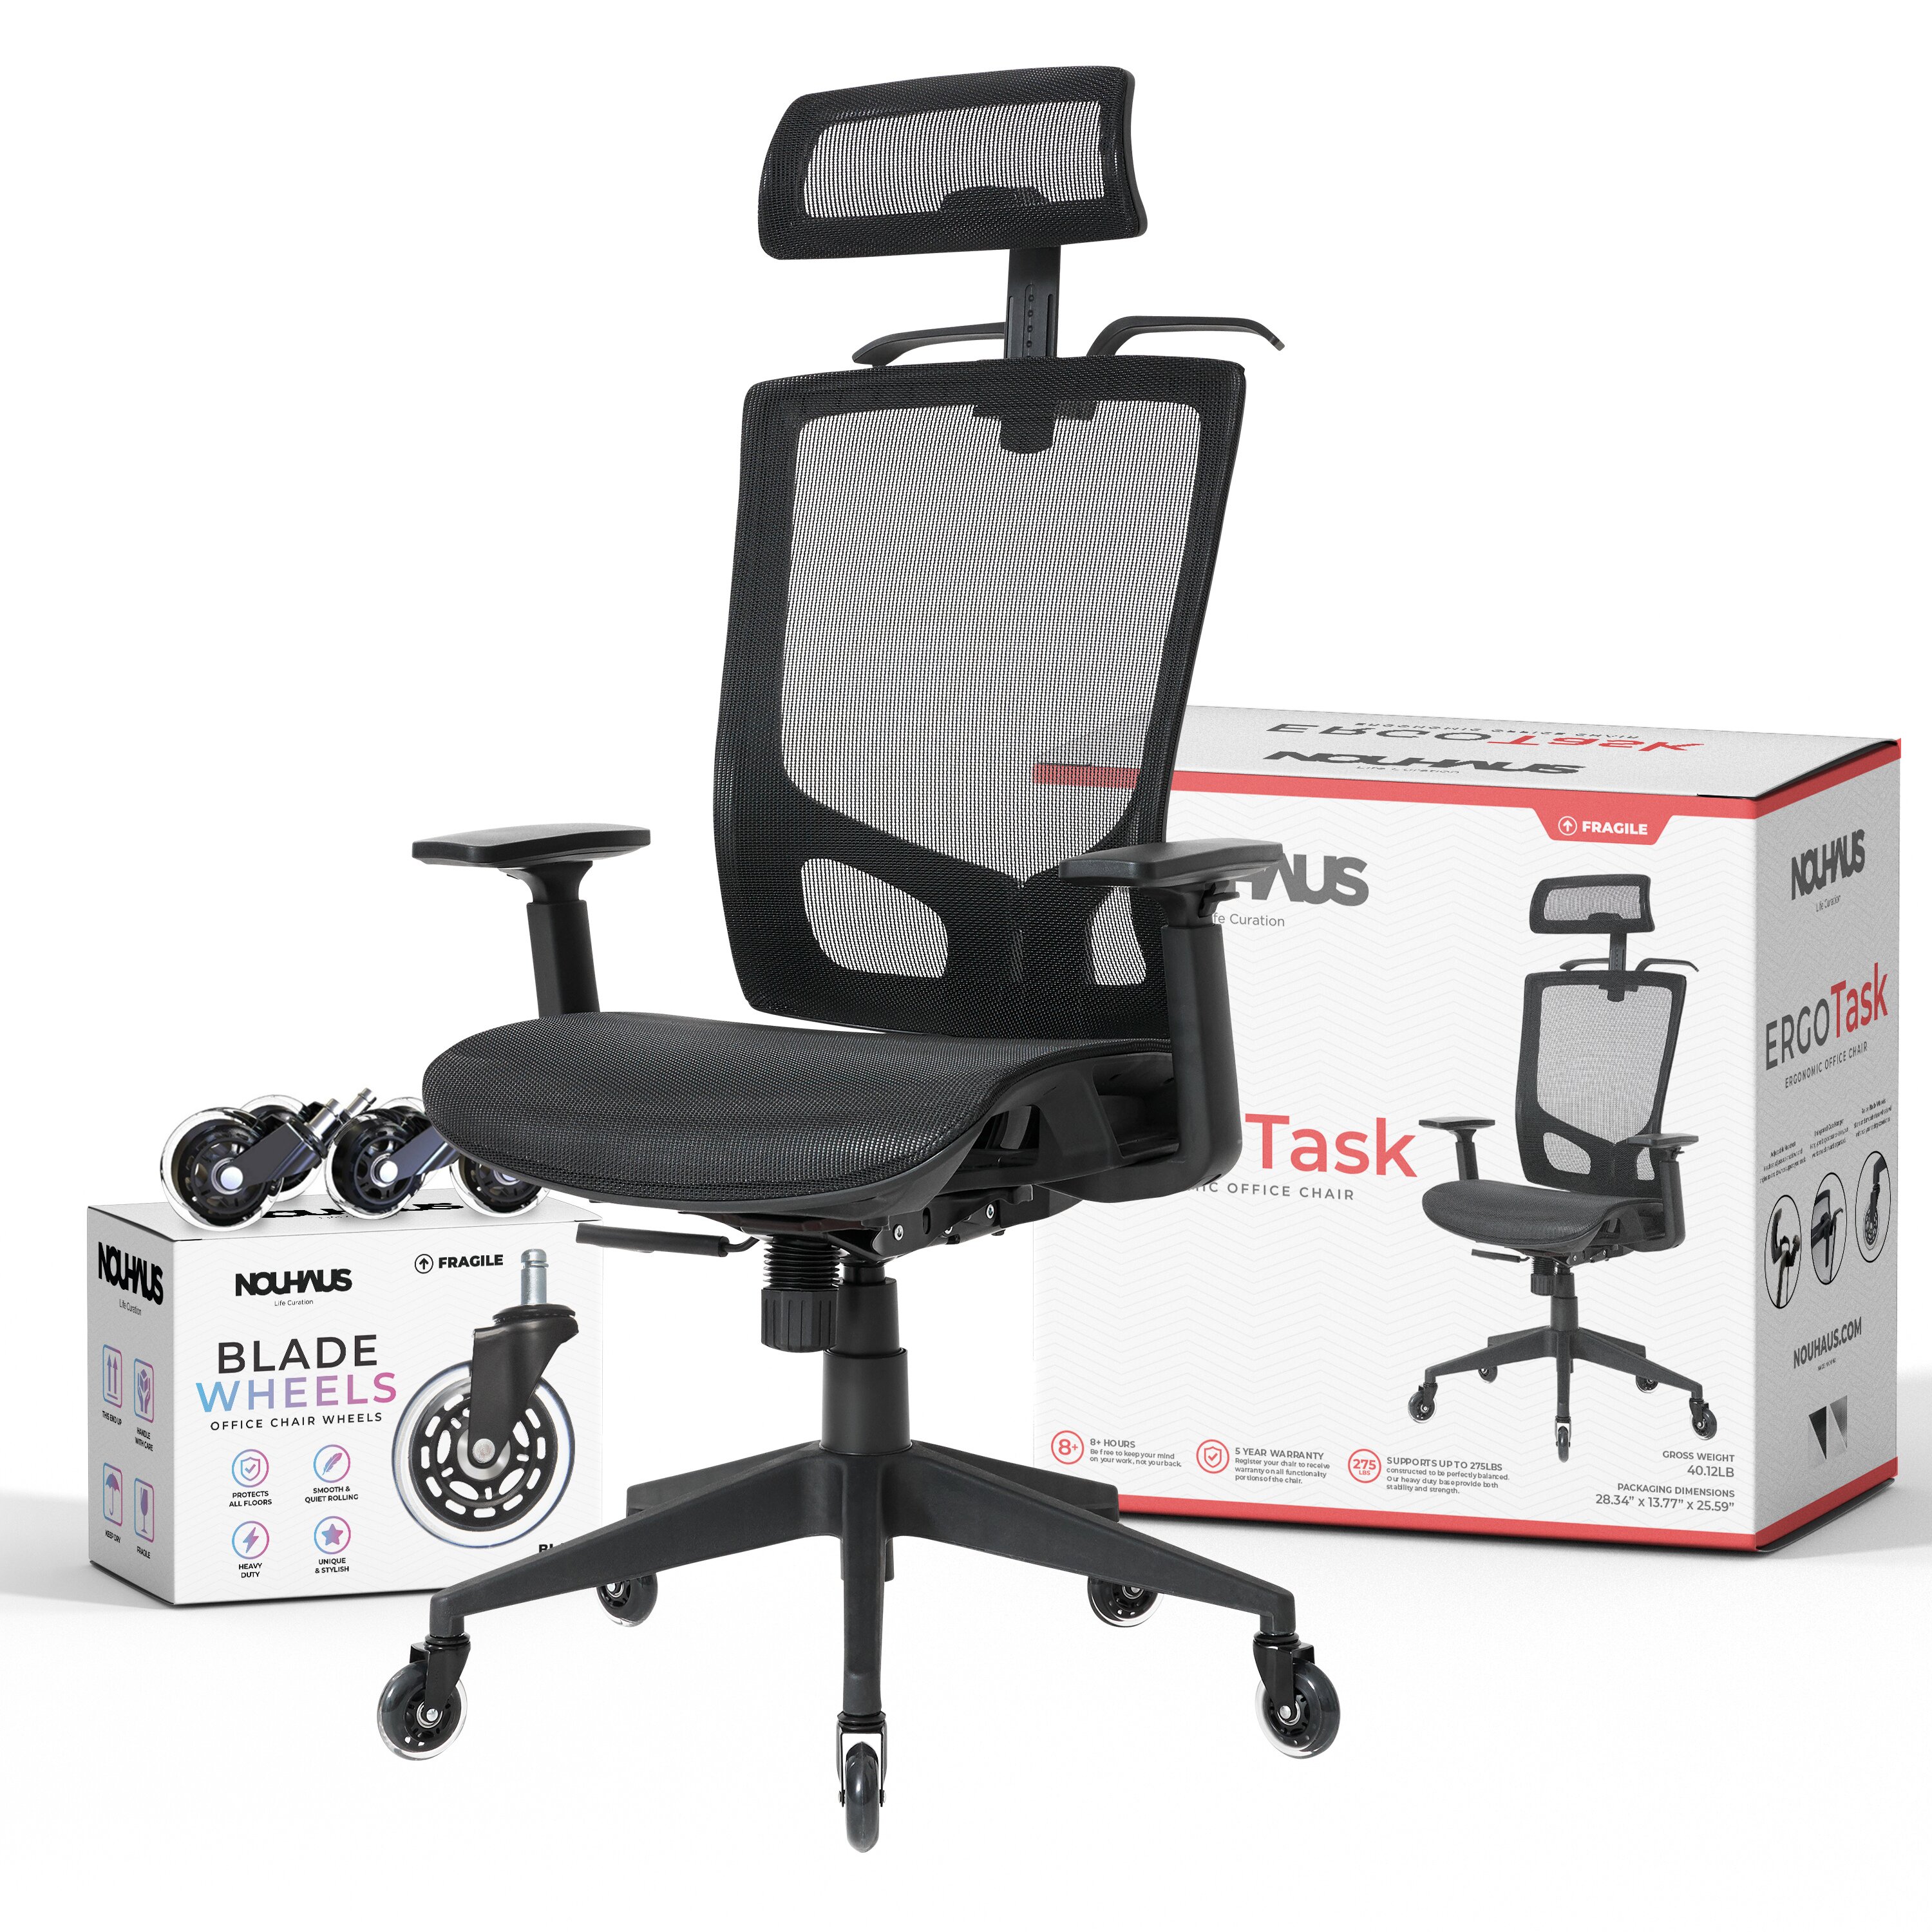 Lorell 86000 Series Exec Chair Adjustable Headrest - Black